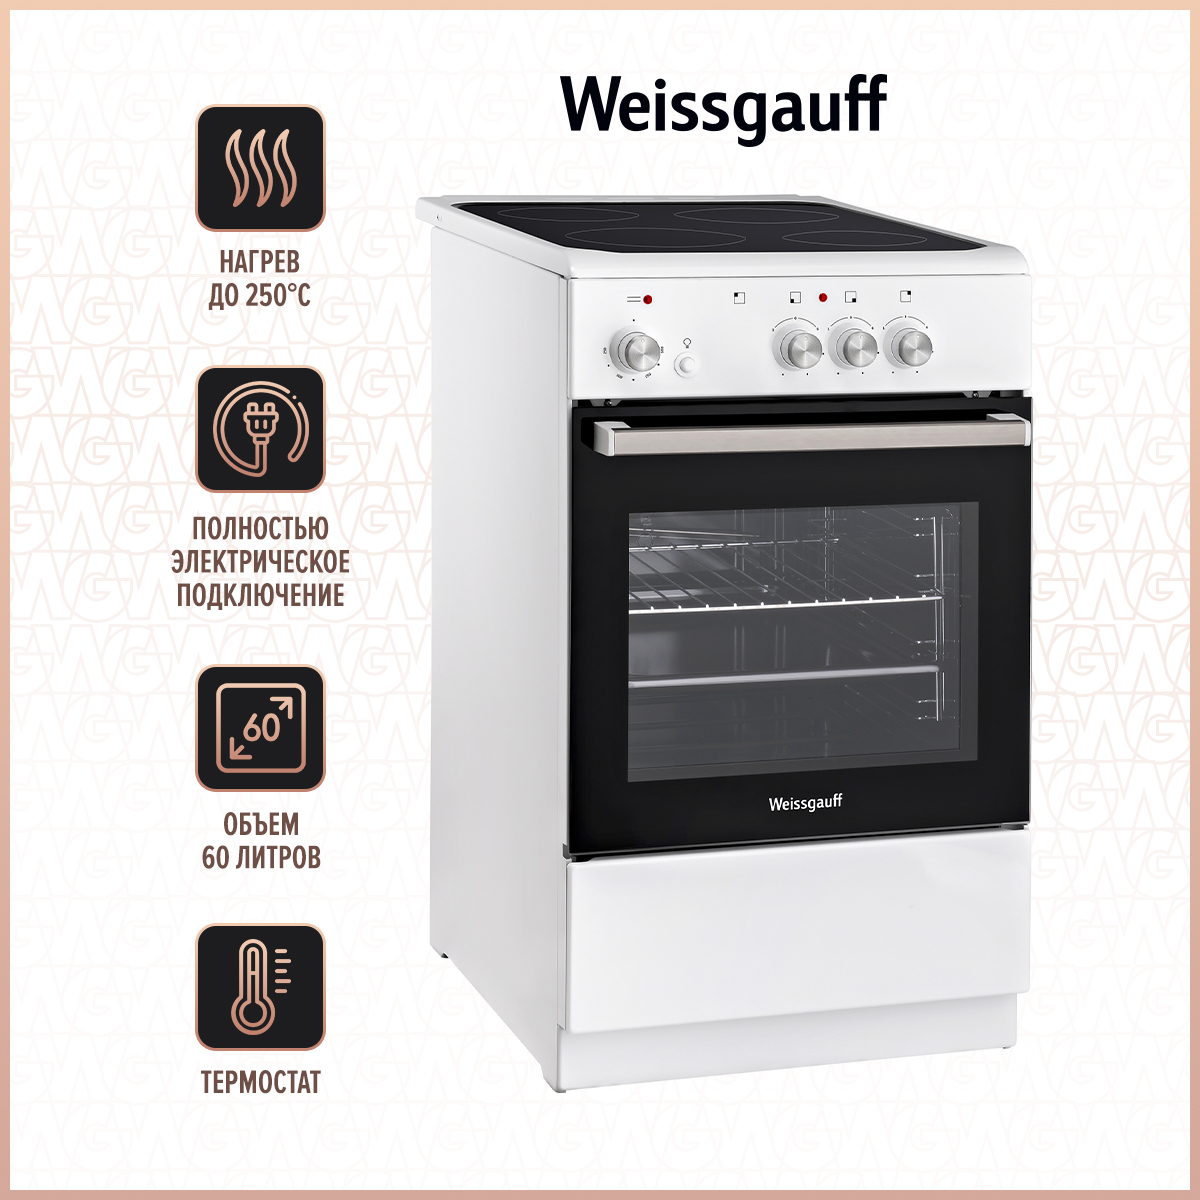 Электрическая плита Weissgauff WES E2V02 WS белый электрическая плита weissgauff wes e2v05 w белый